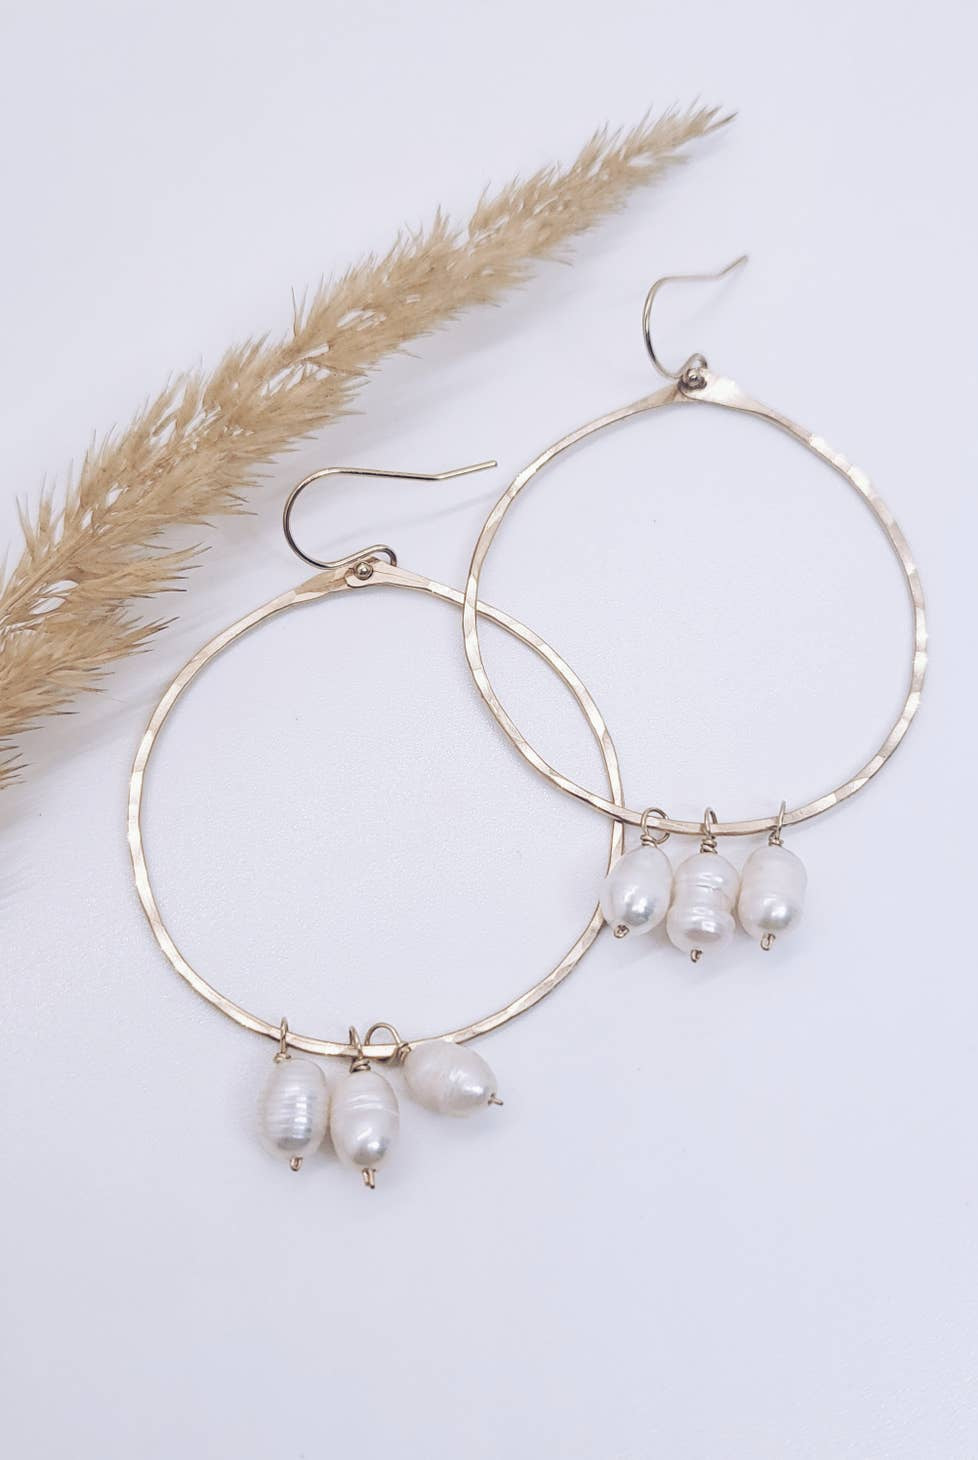 
  
  Sunny Bay 14k Gold Filled Pearl Hoops Earrings
  
